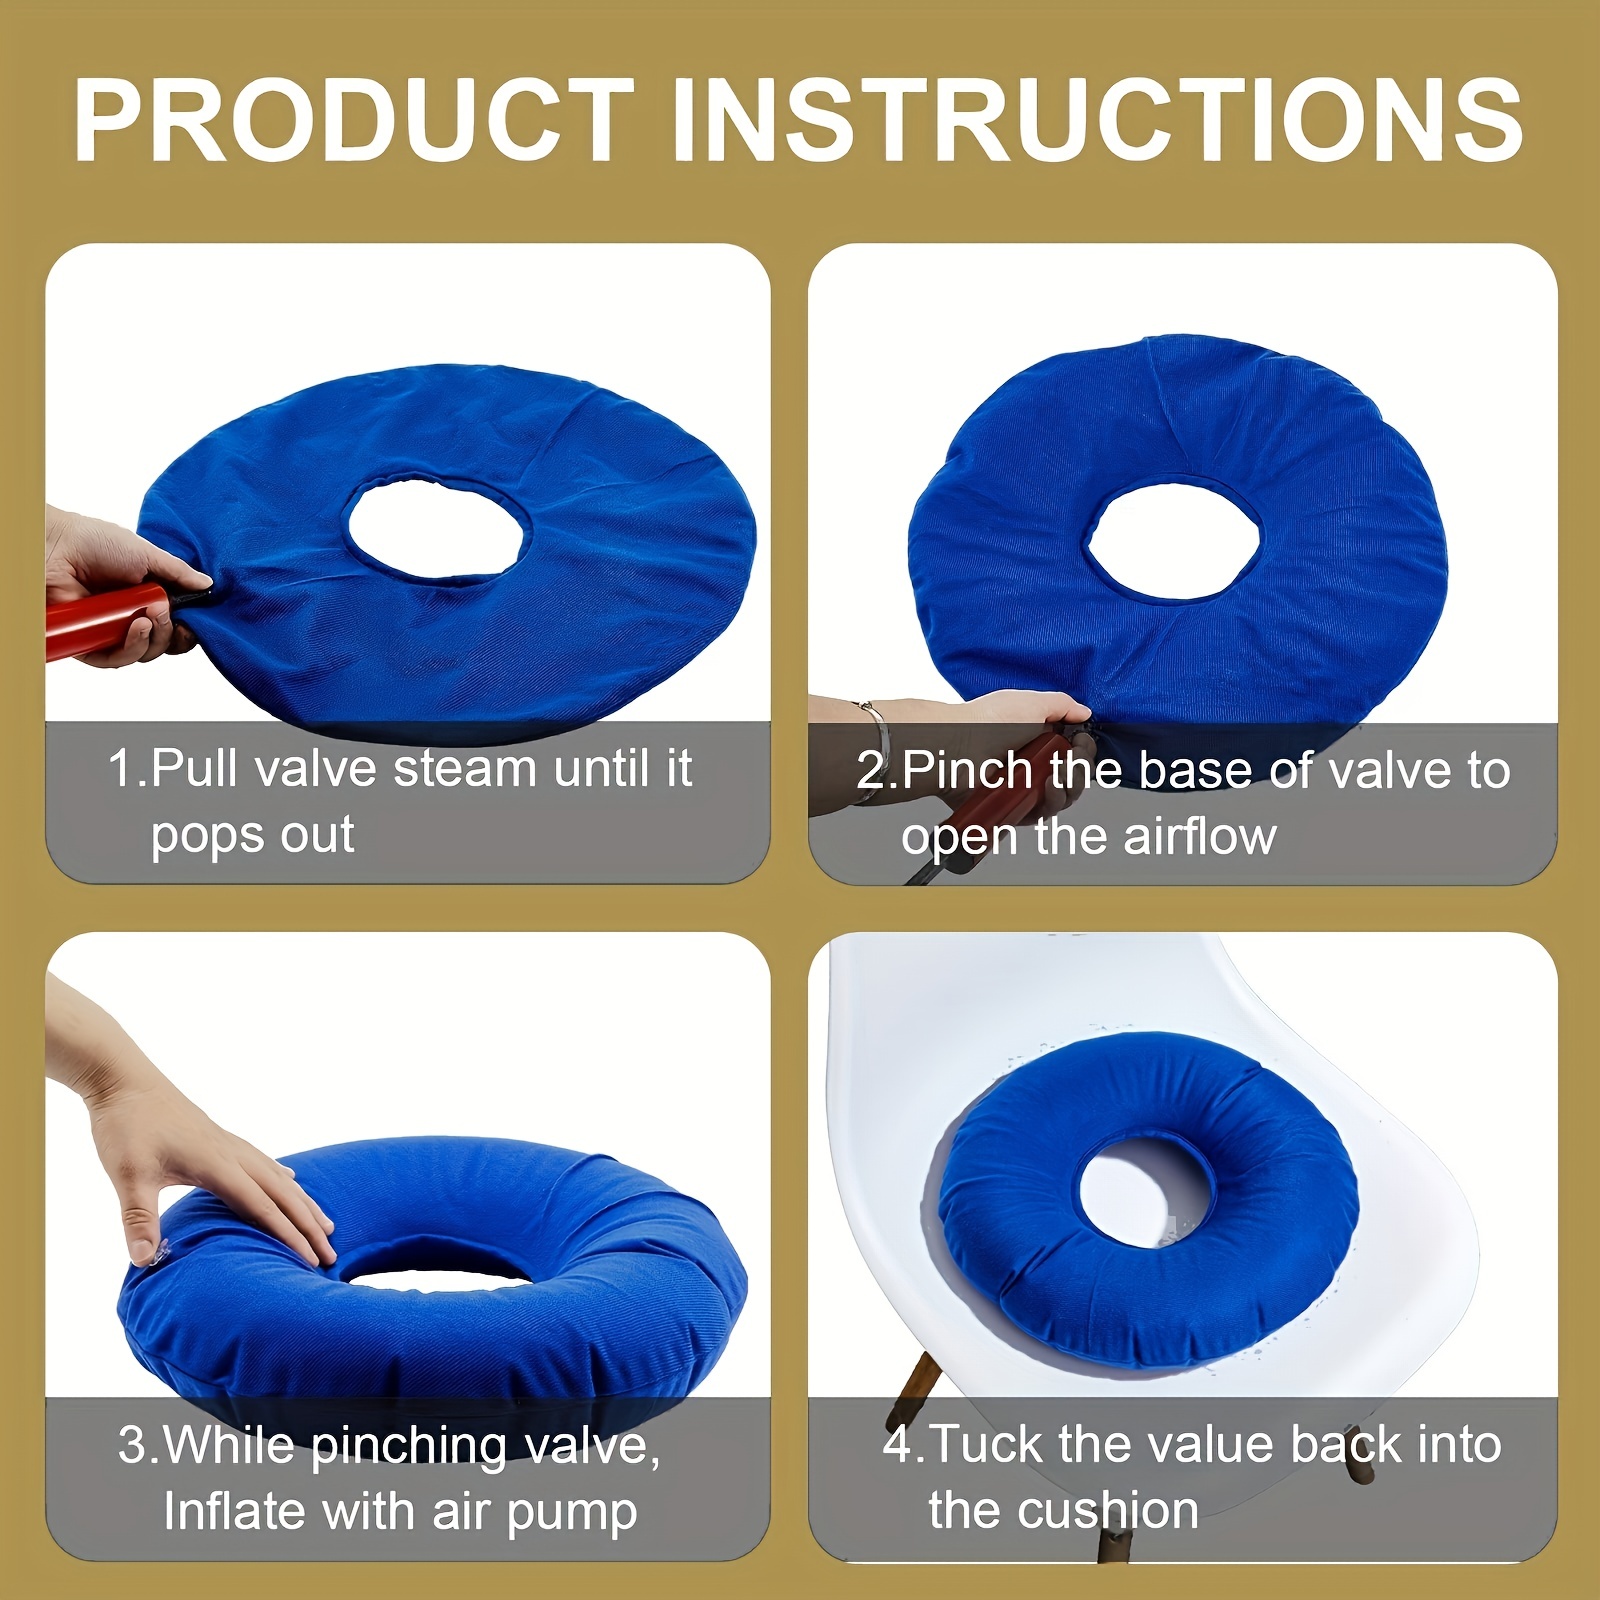 Portable Donut Pillow Tailbone Hemorrhoid Cushion Waterproof